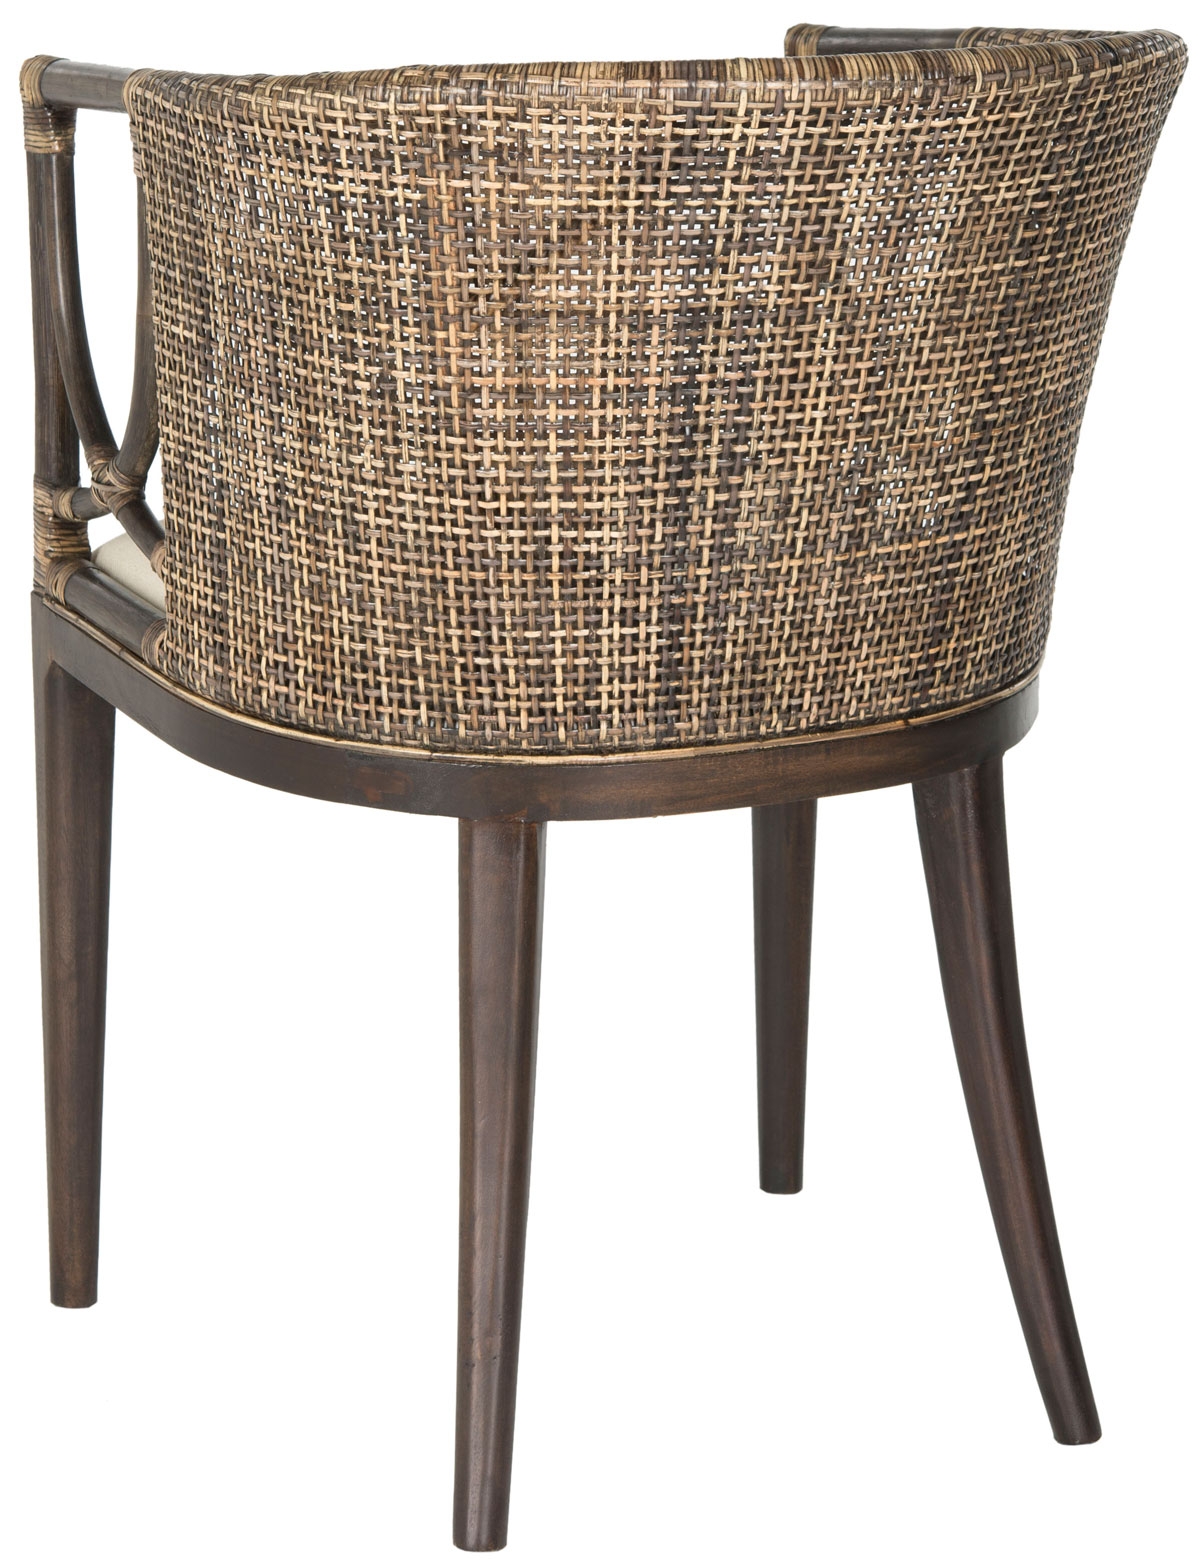 Beningo Arm Chair - Brown/Black - Arlo Home - Image 4